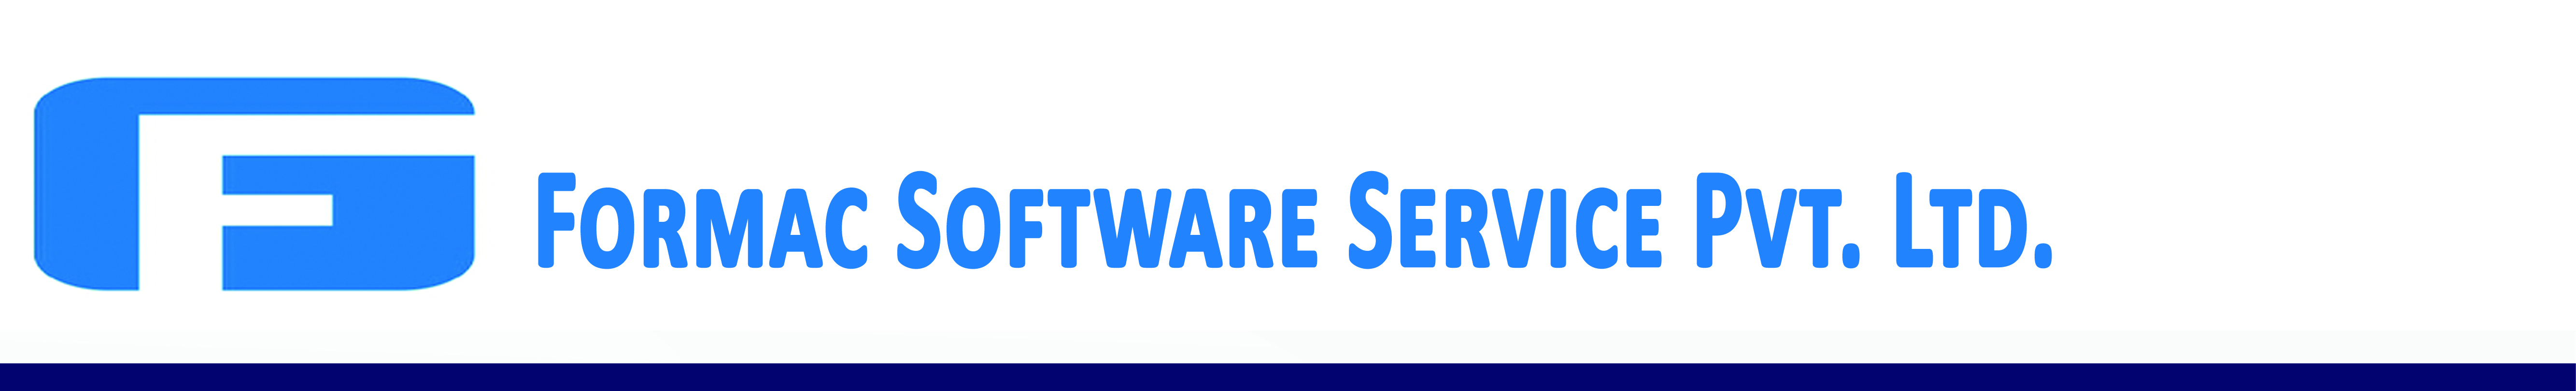 Formac Software Service Pvt. Ltd.